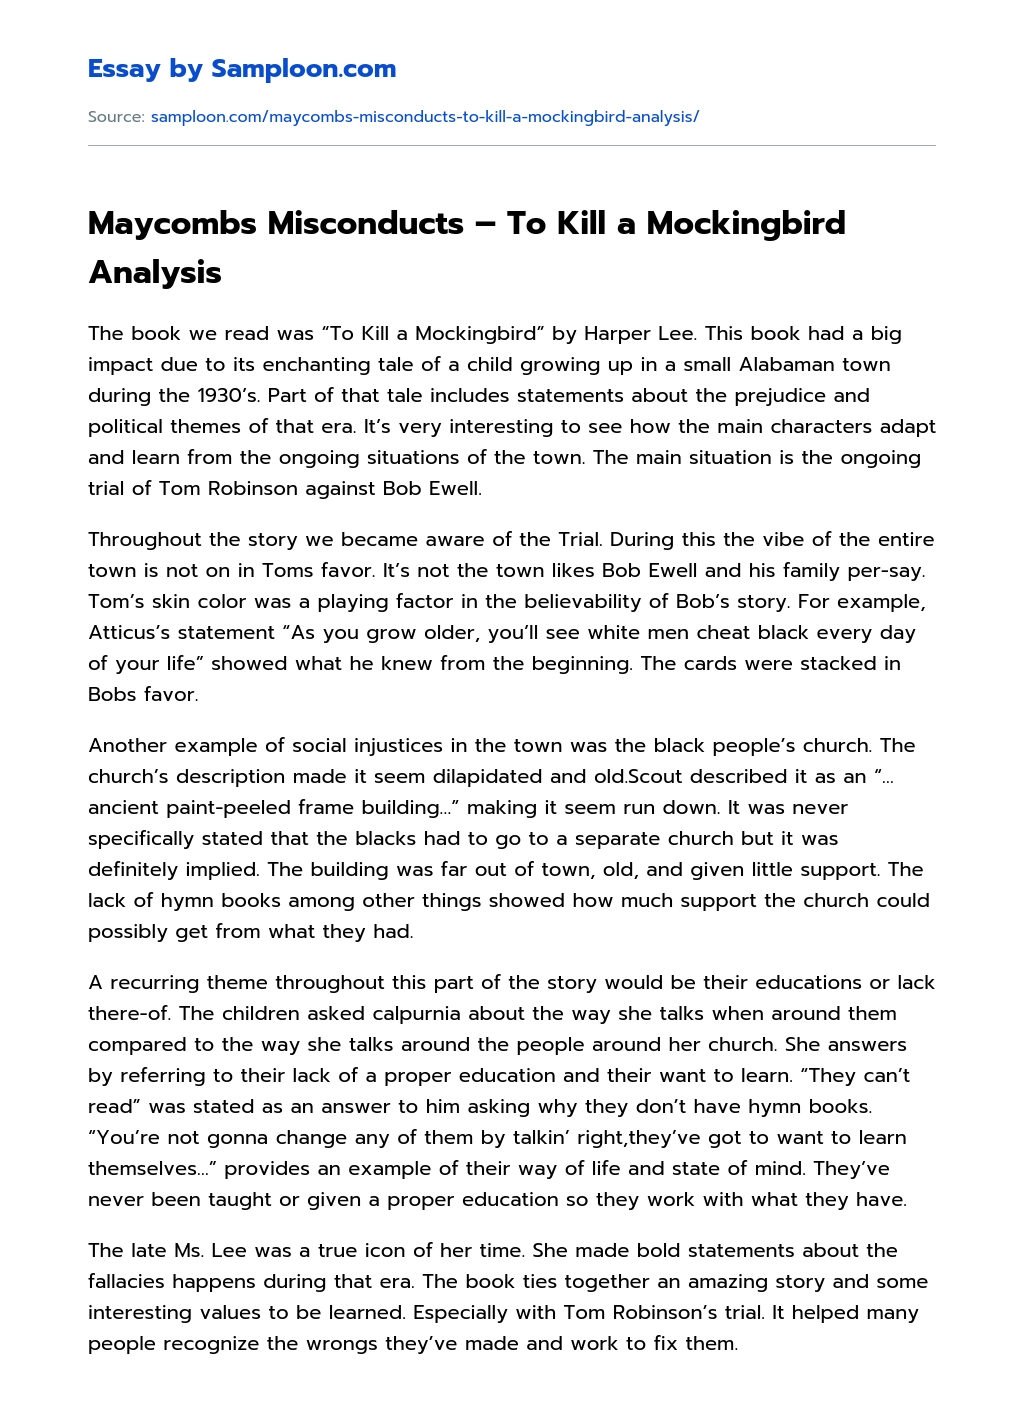 Maycombs Misconducts – To Kill a Mockingbird Analysis essay